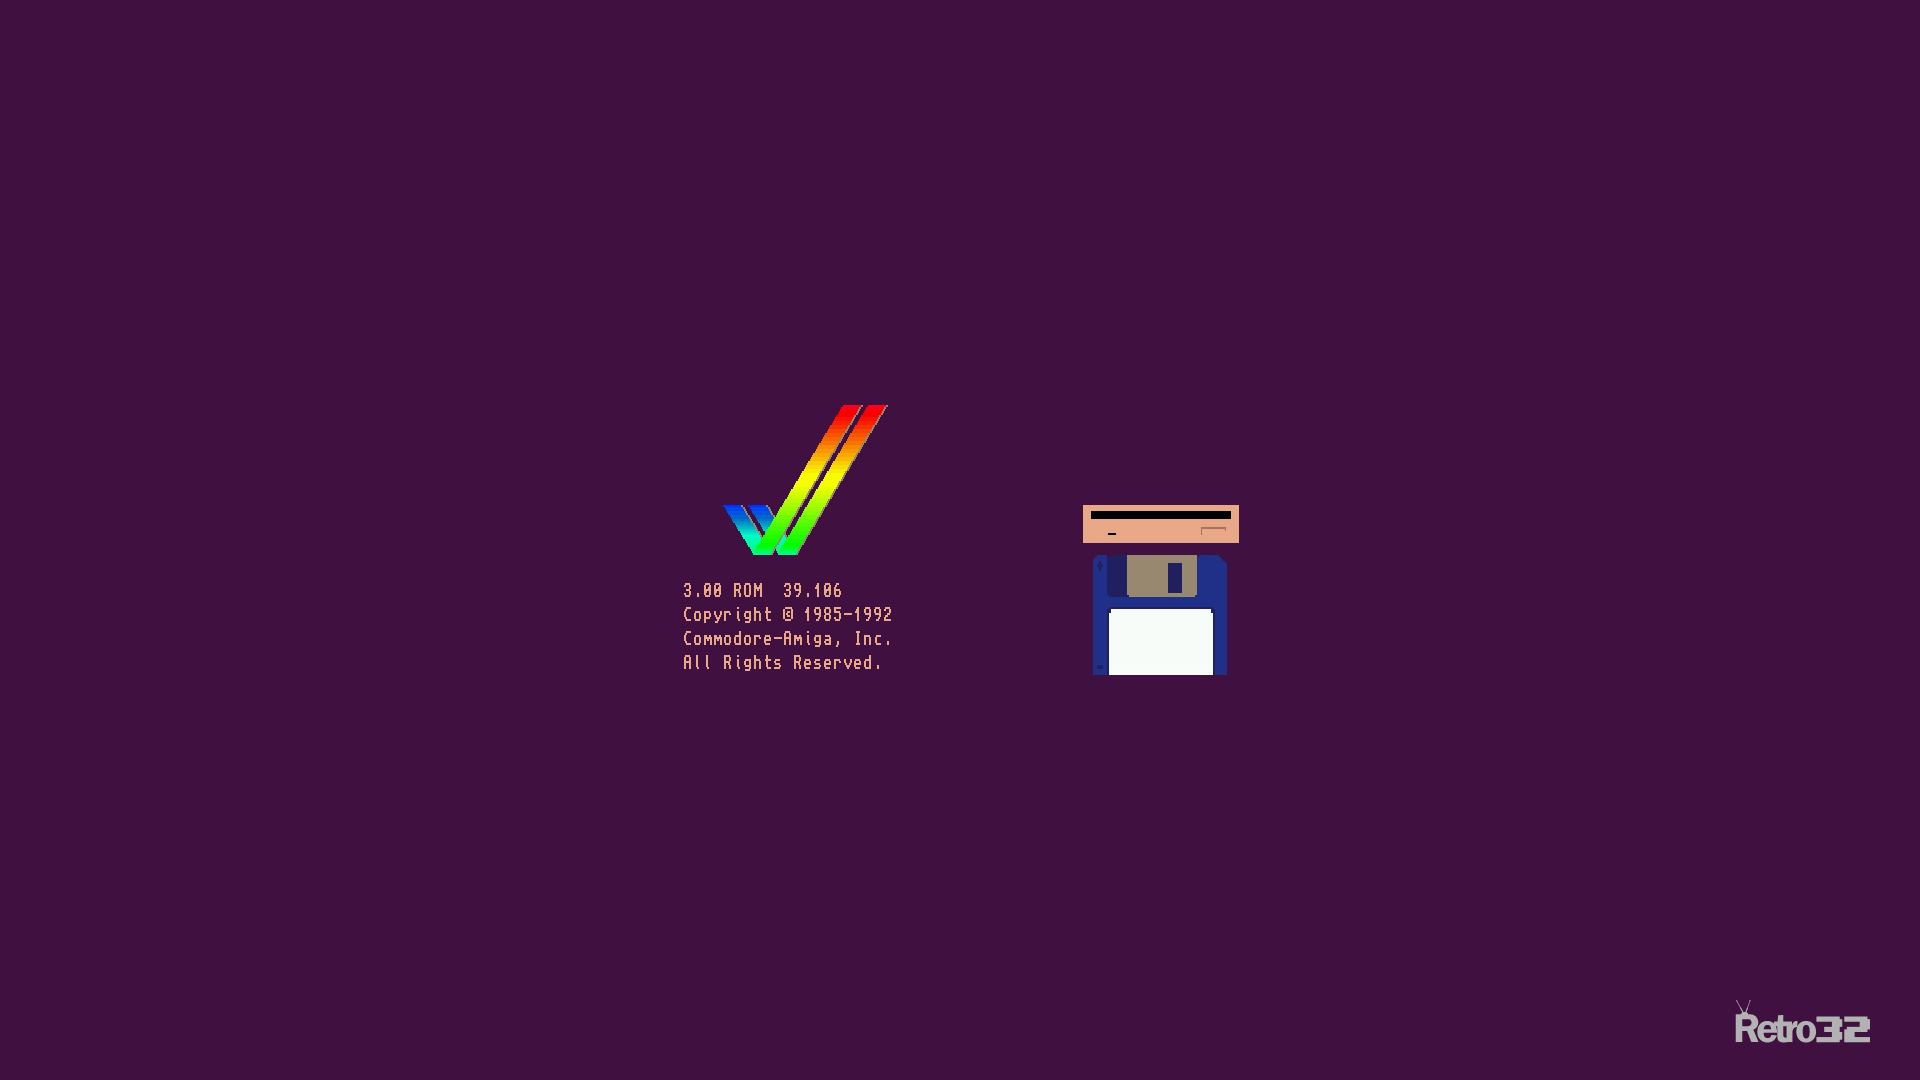 Commodore Amiga Desktop background & wallpaper